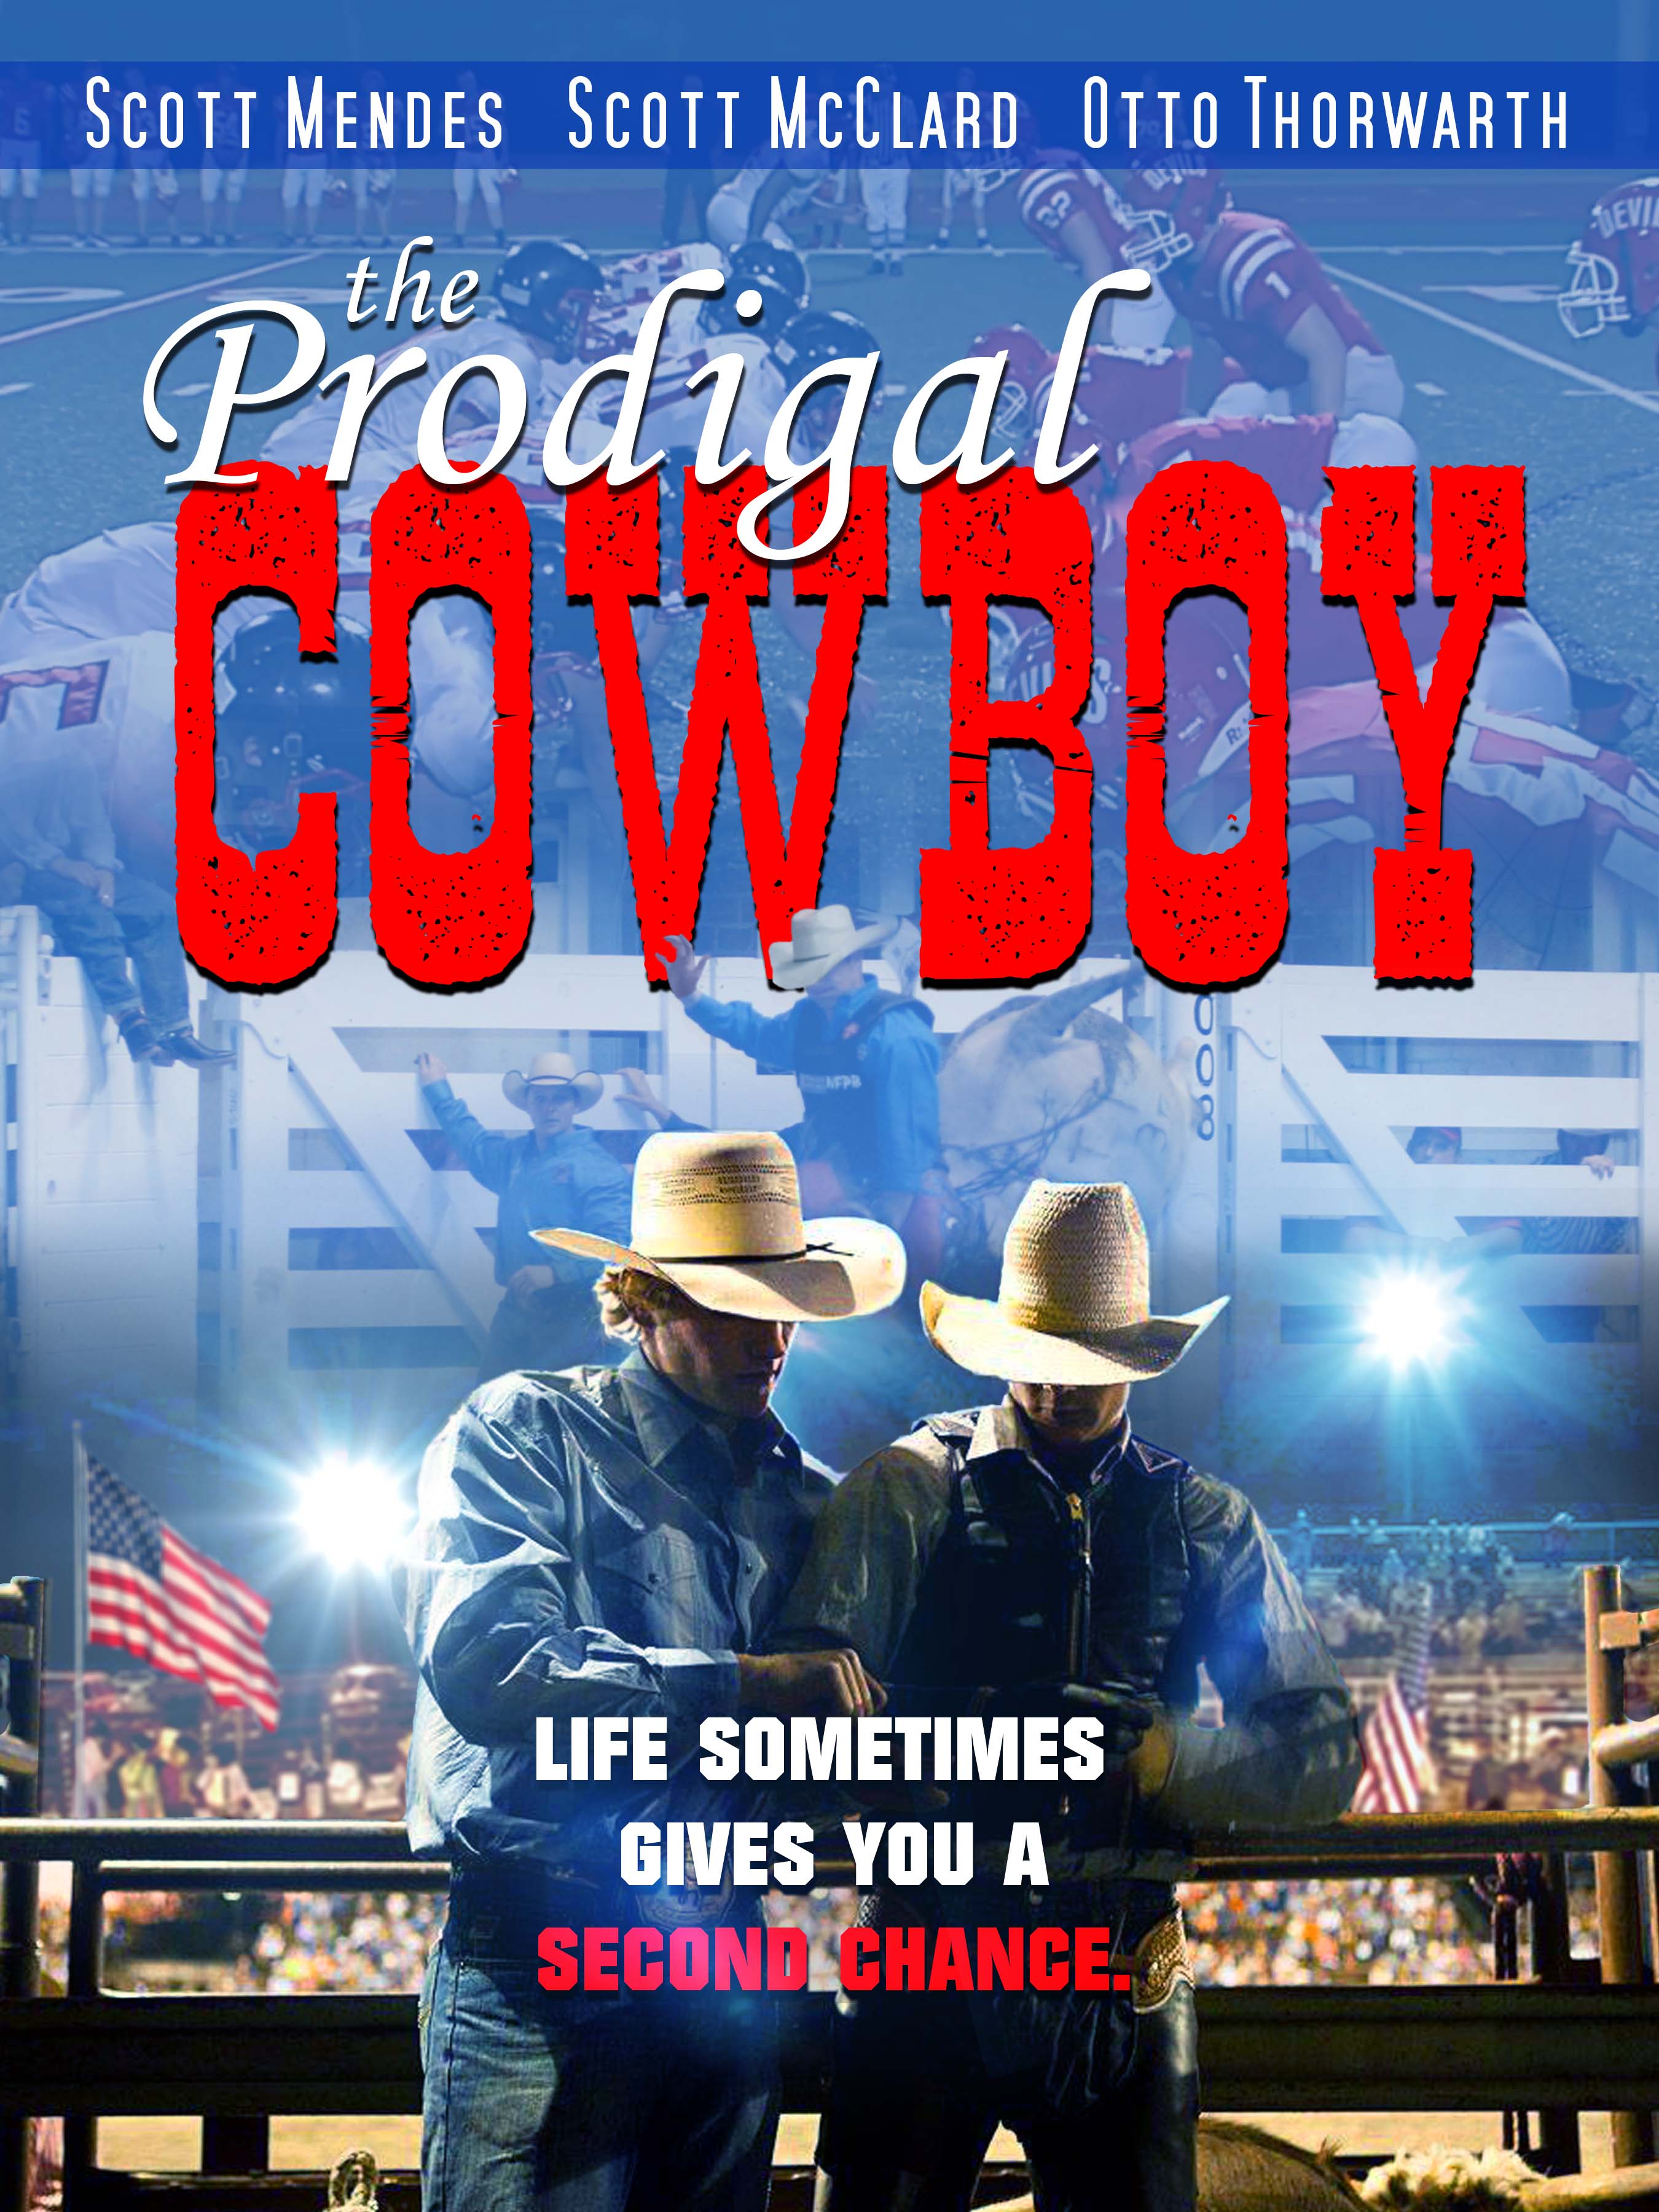 The Prodigal Cowboy (2020)